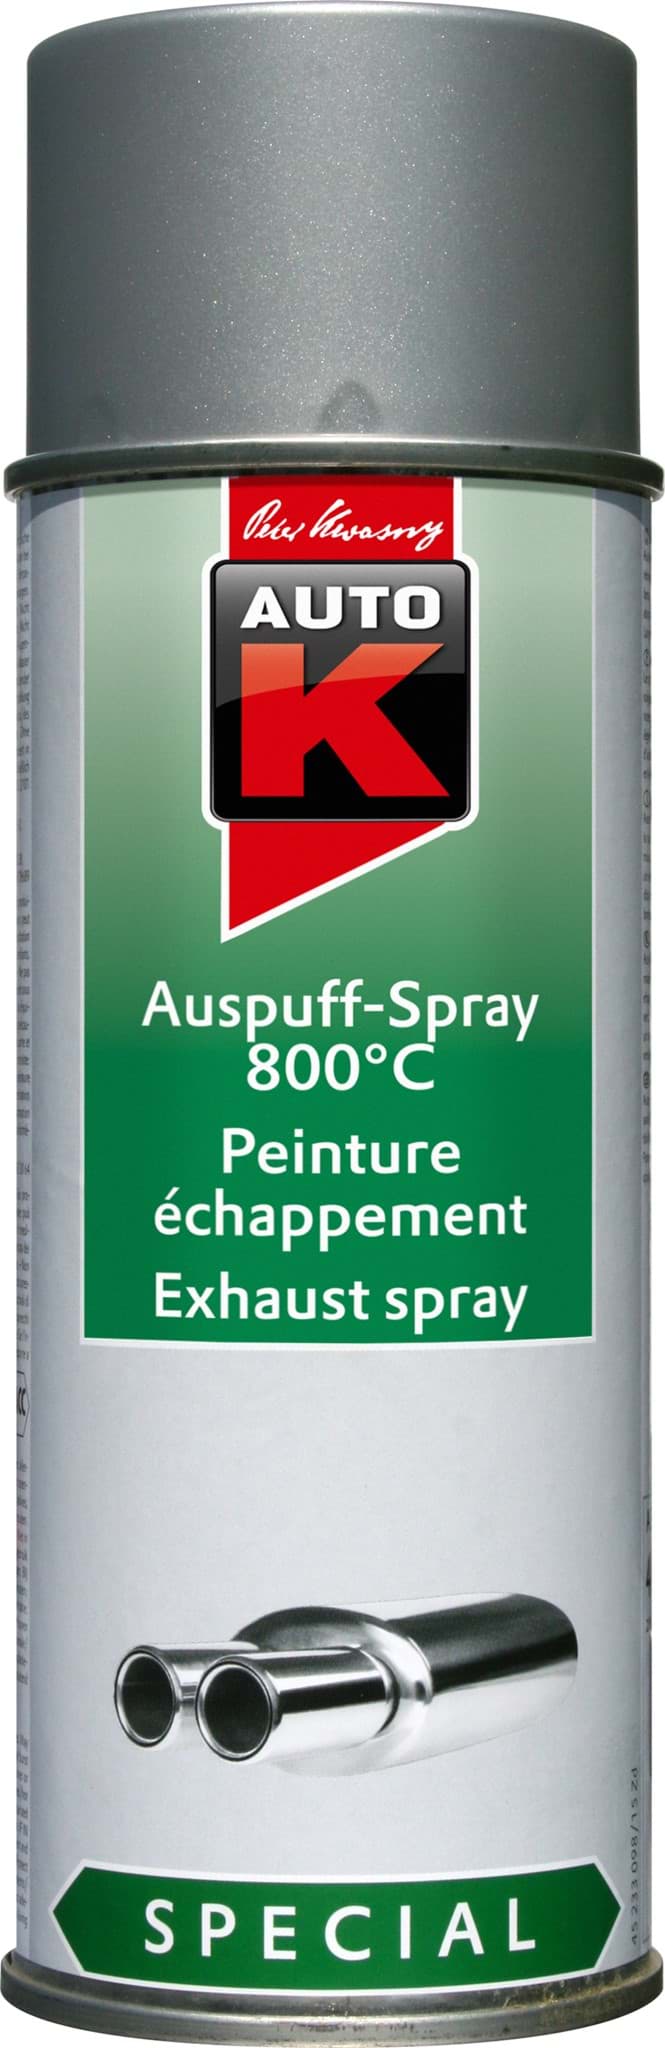 Afbeelding van AutoK Auspuff Spray 800C° silber 400ml 233098 